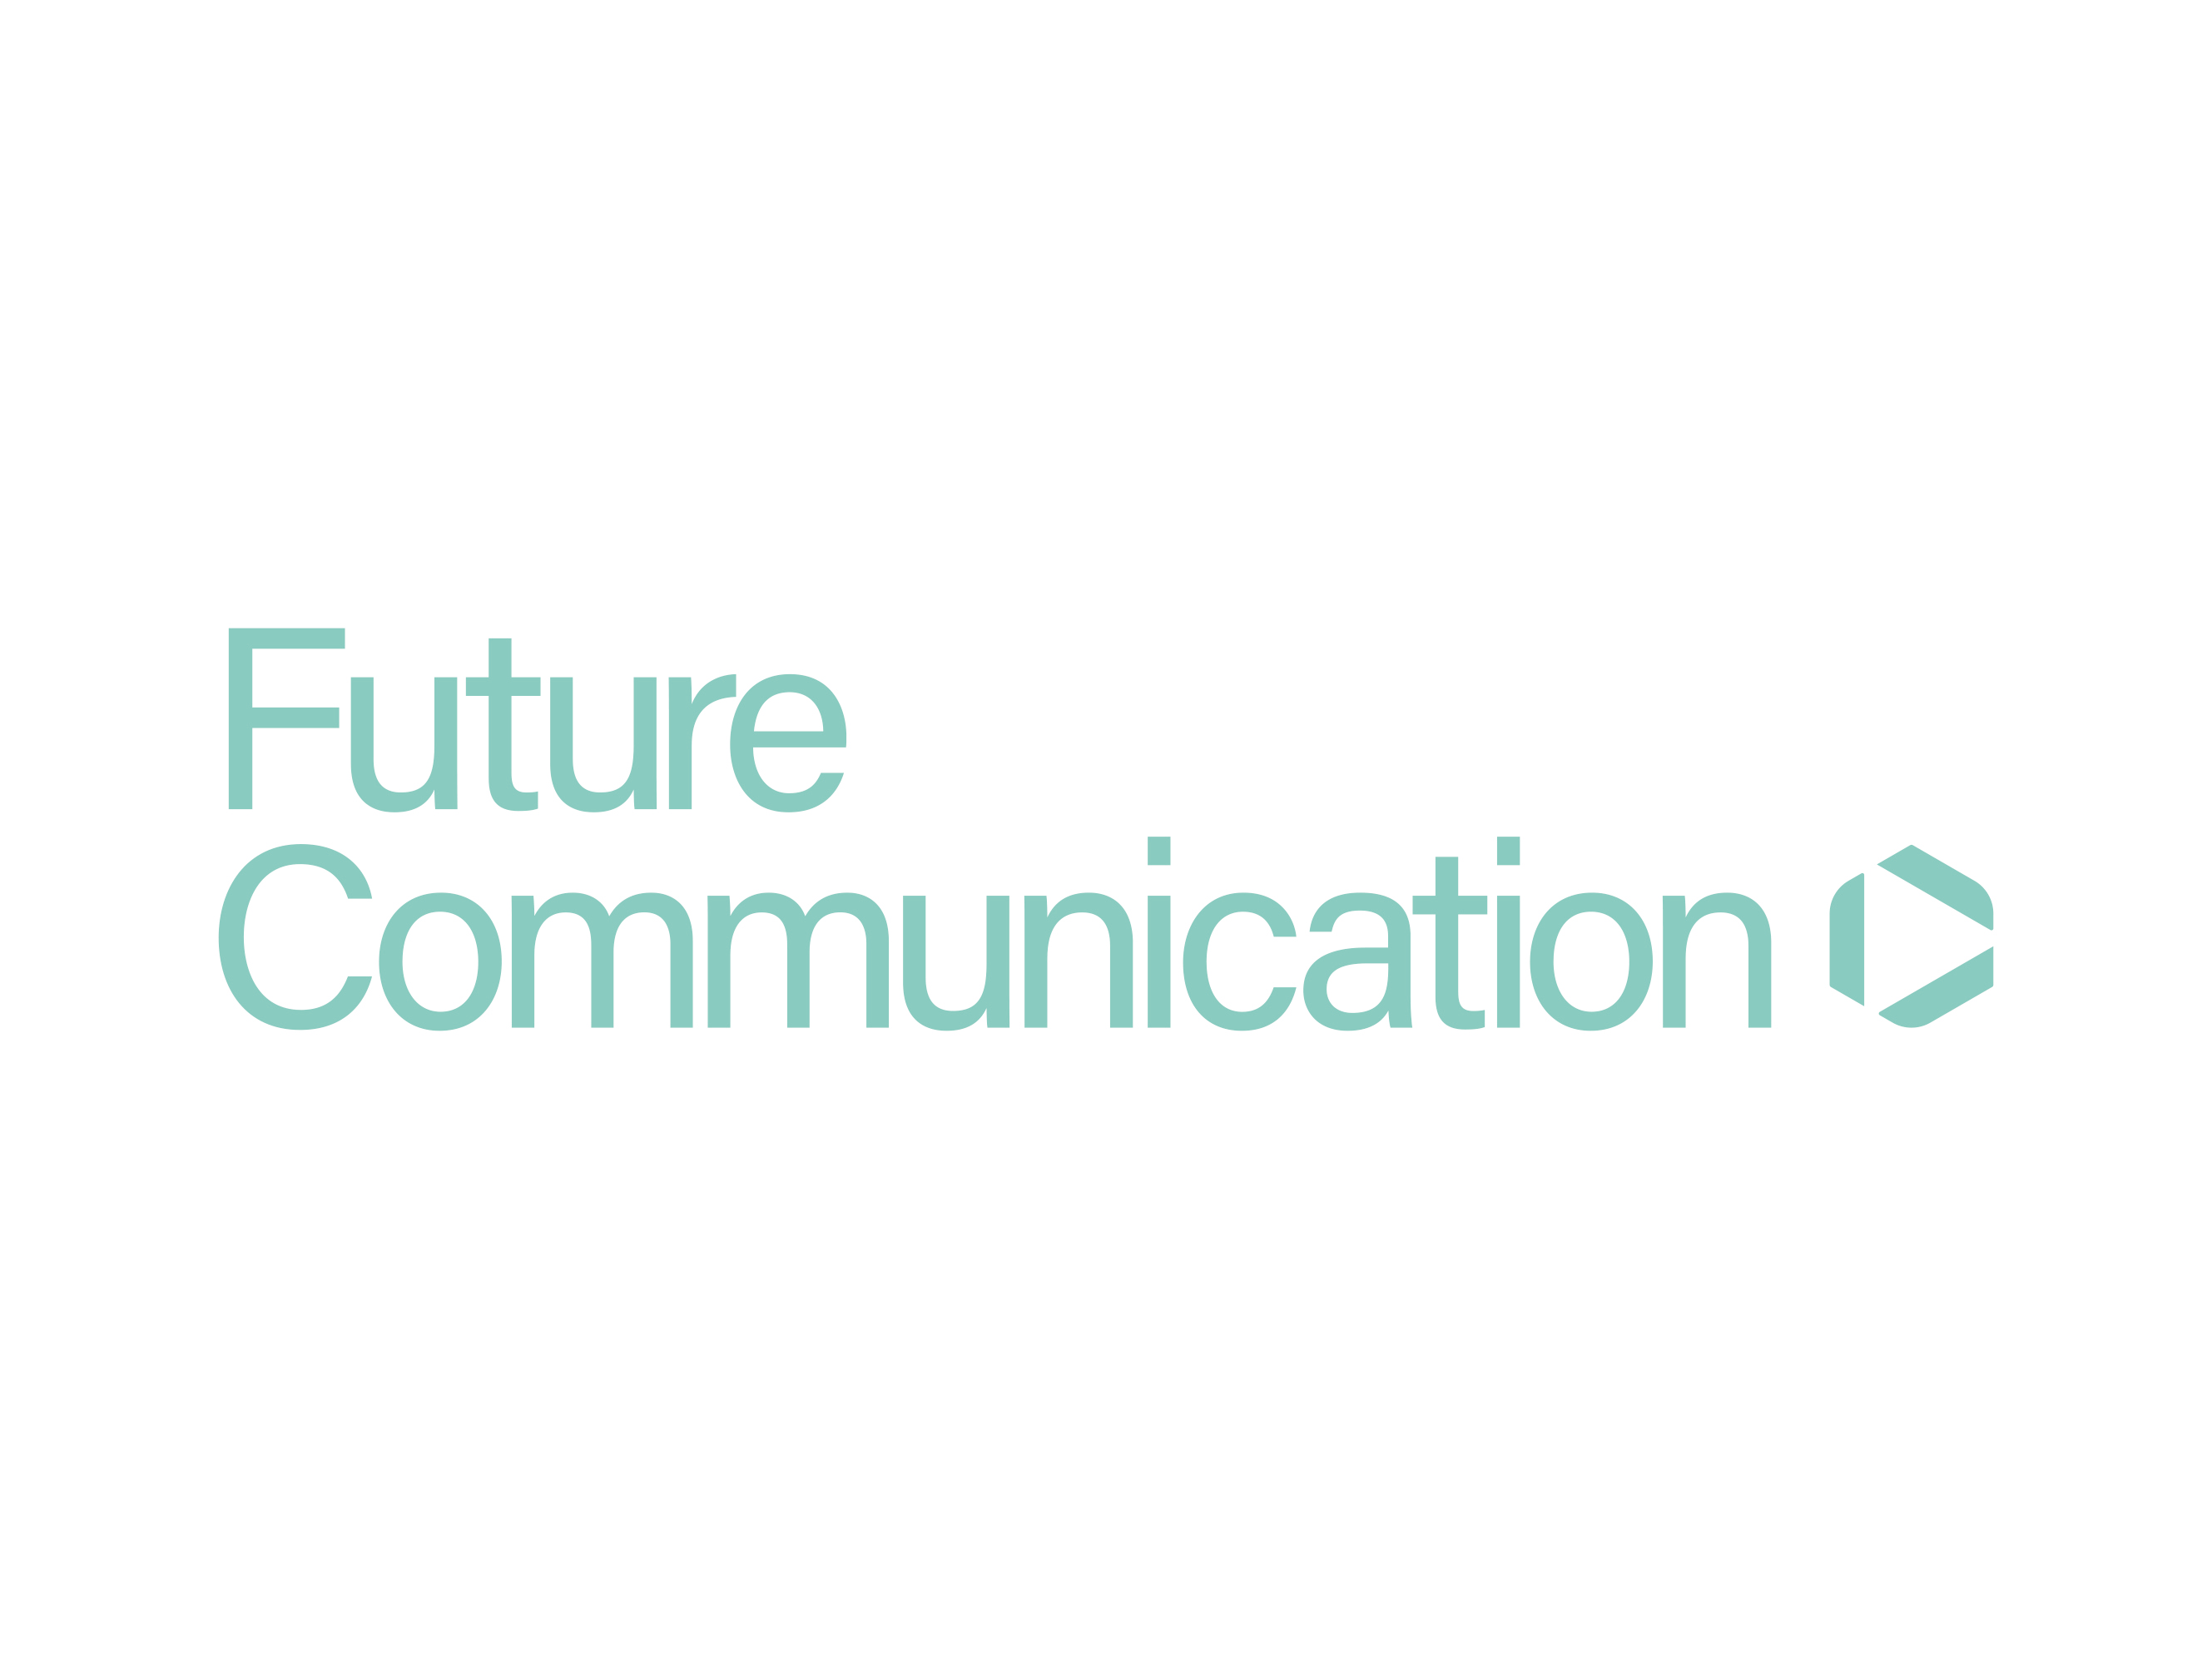 Future communication logo 4x3